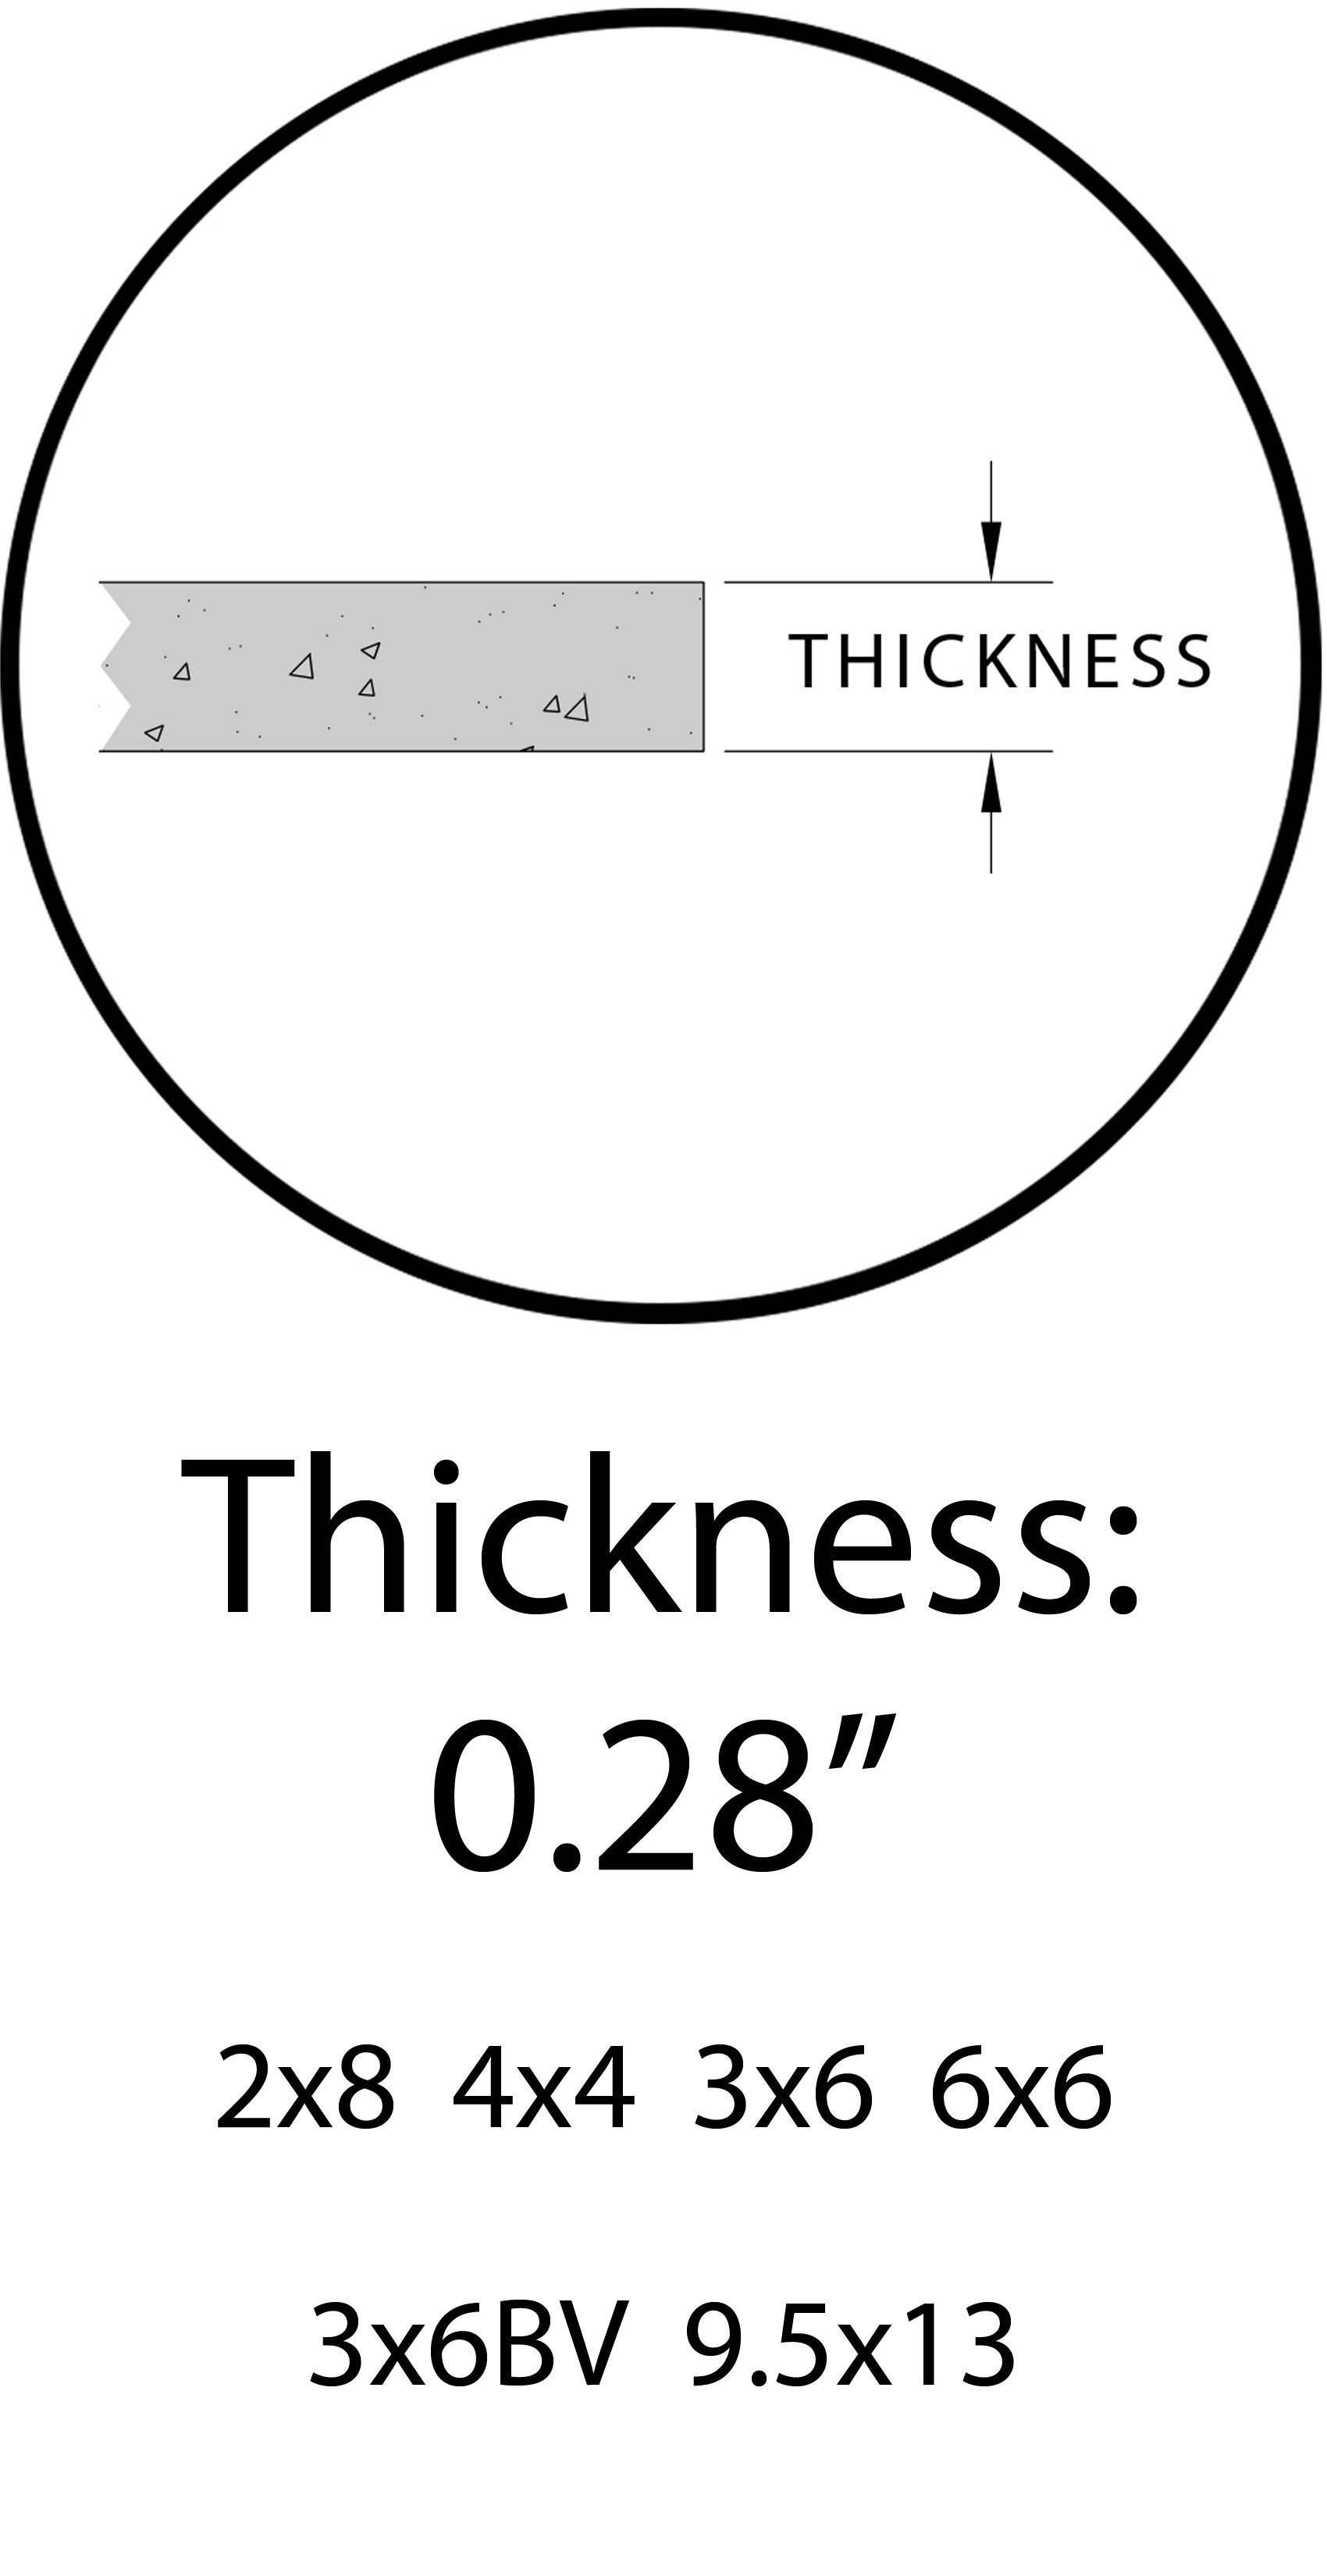 08.1 Thickness_0 point 28 inches_2x8  4x4  3x6  6x6  3x6BV  9x13.jpg